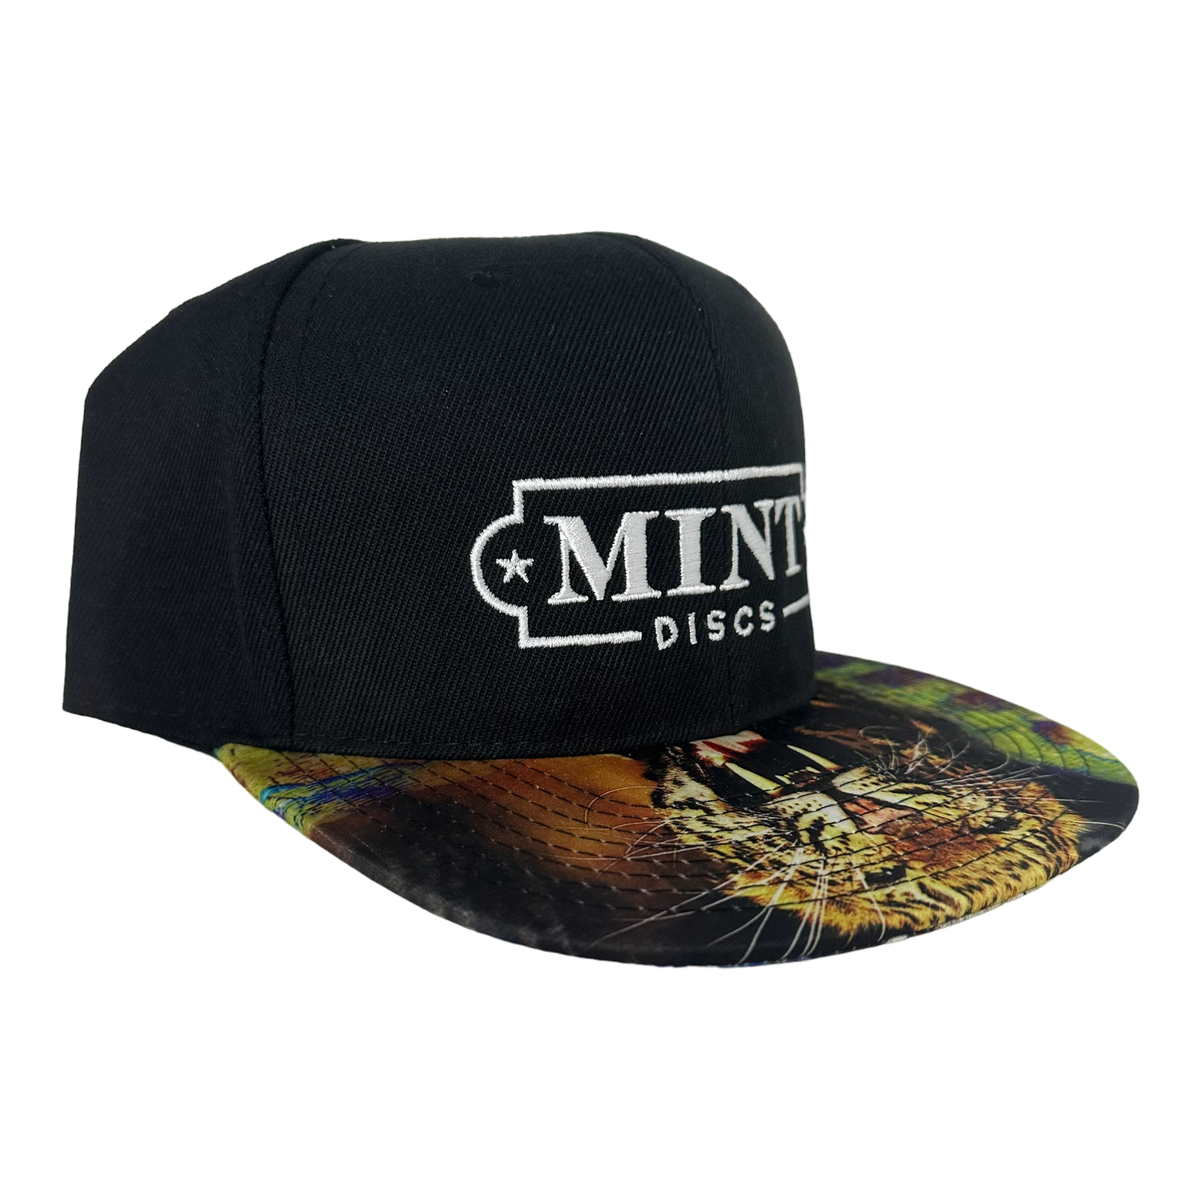 Mint Discs FlatBill Snapback Hat - Animal Print